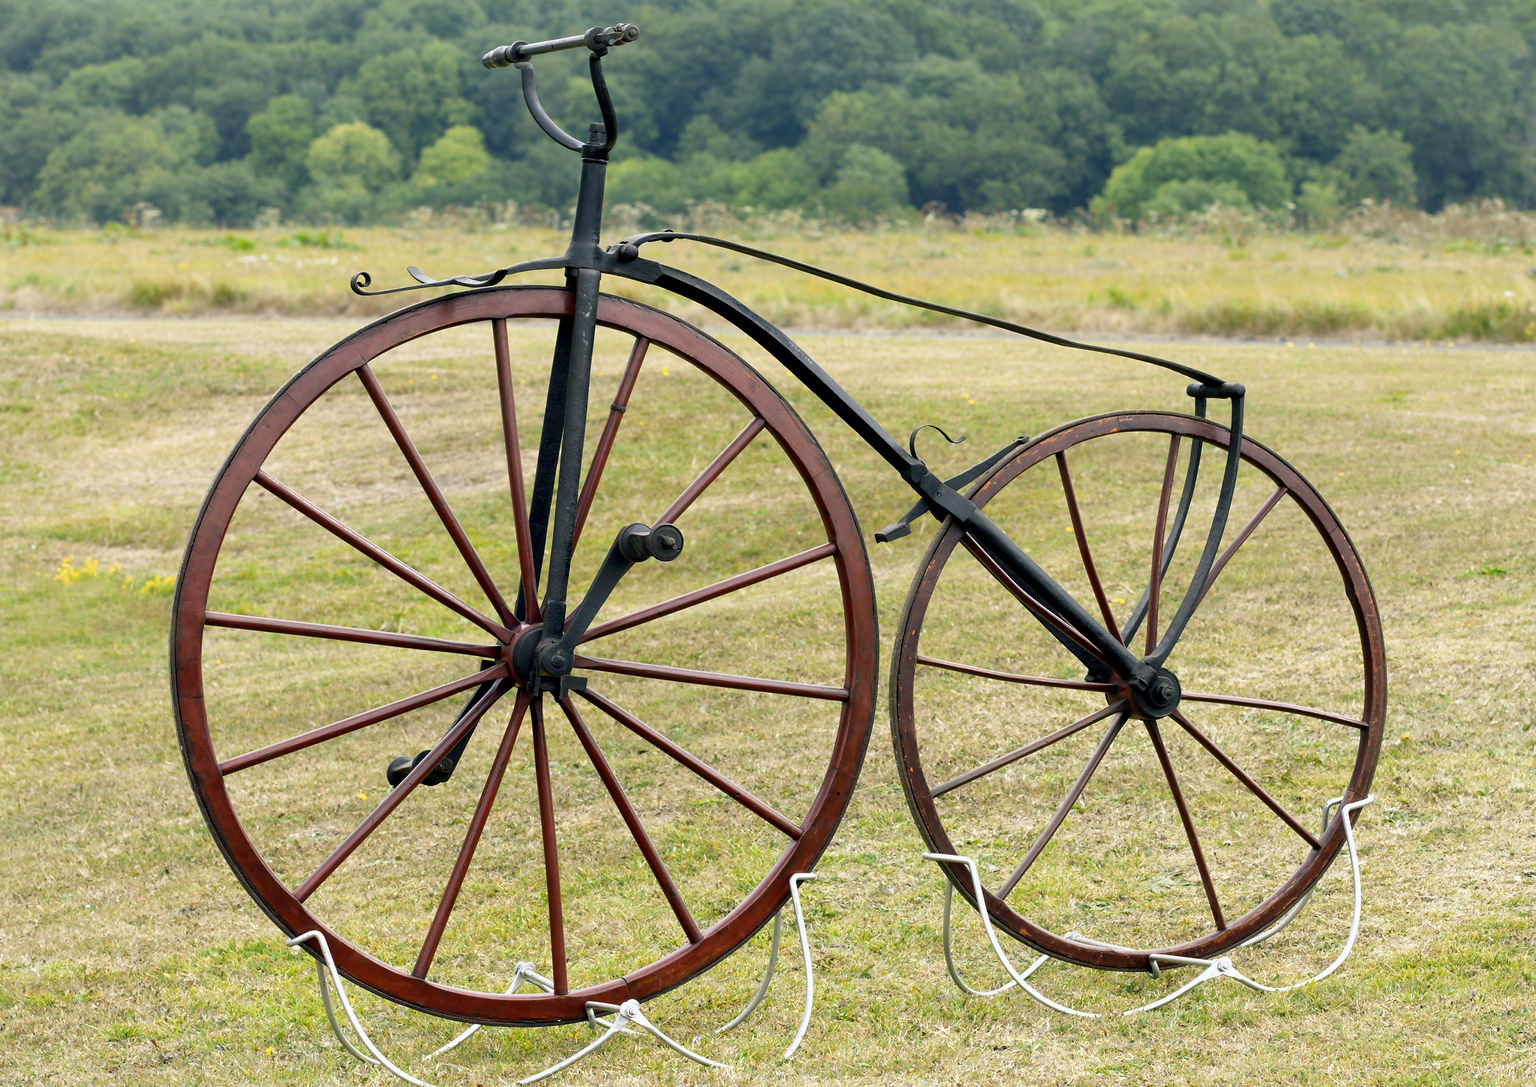 English-built boneshaker bicycle, c. 1865-1870.